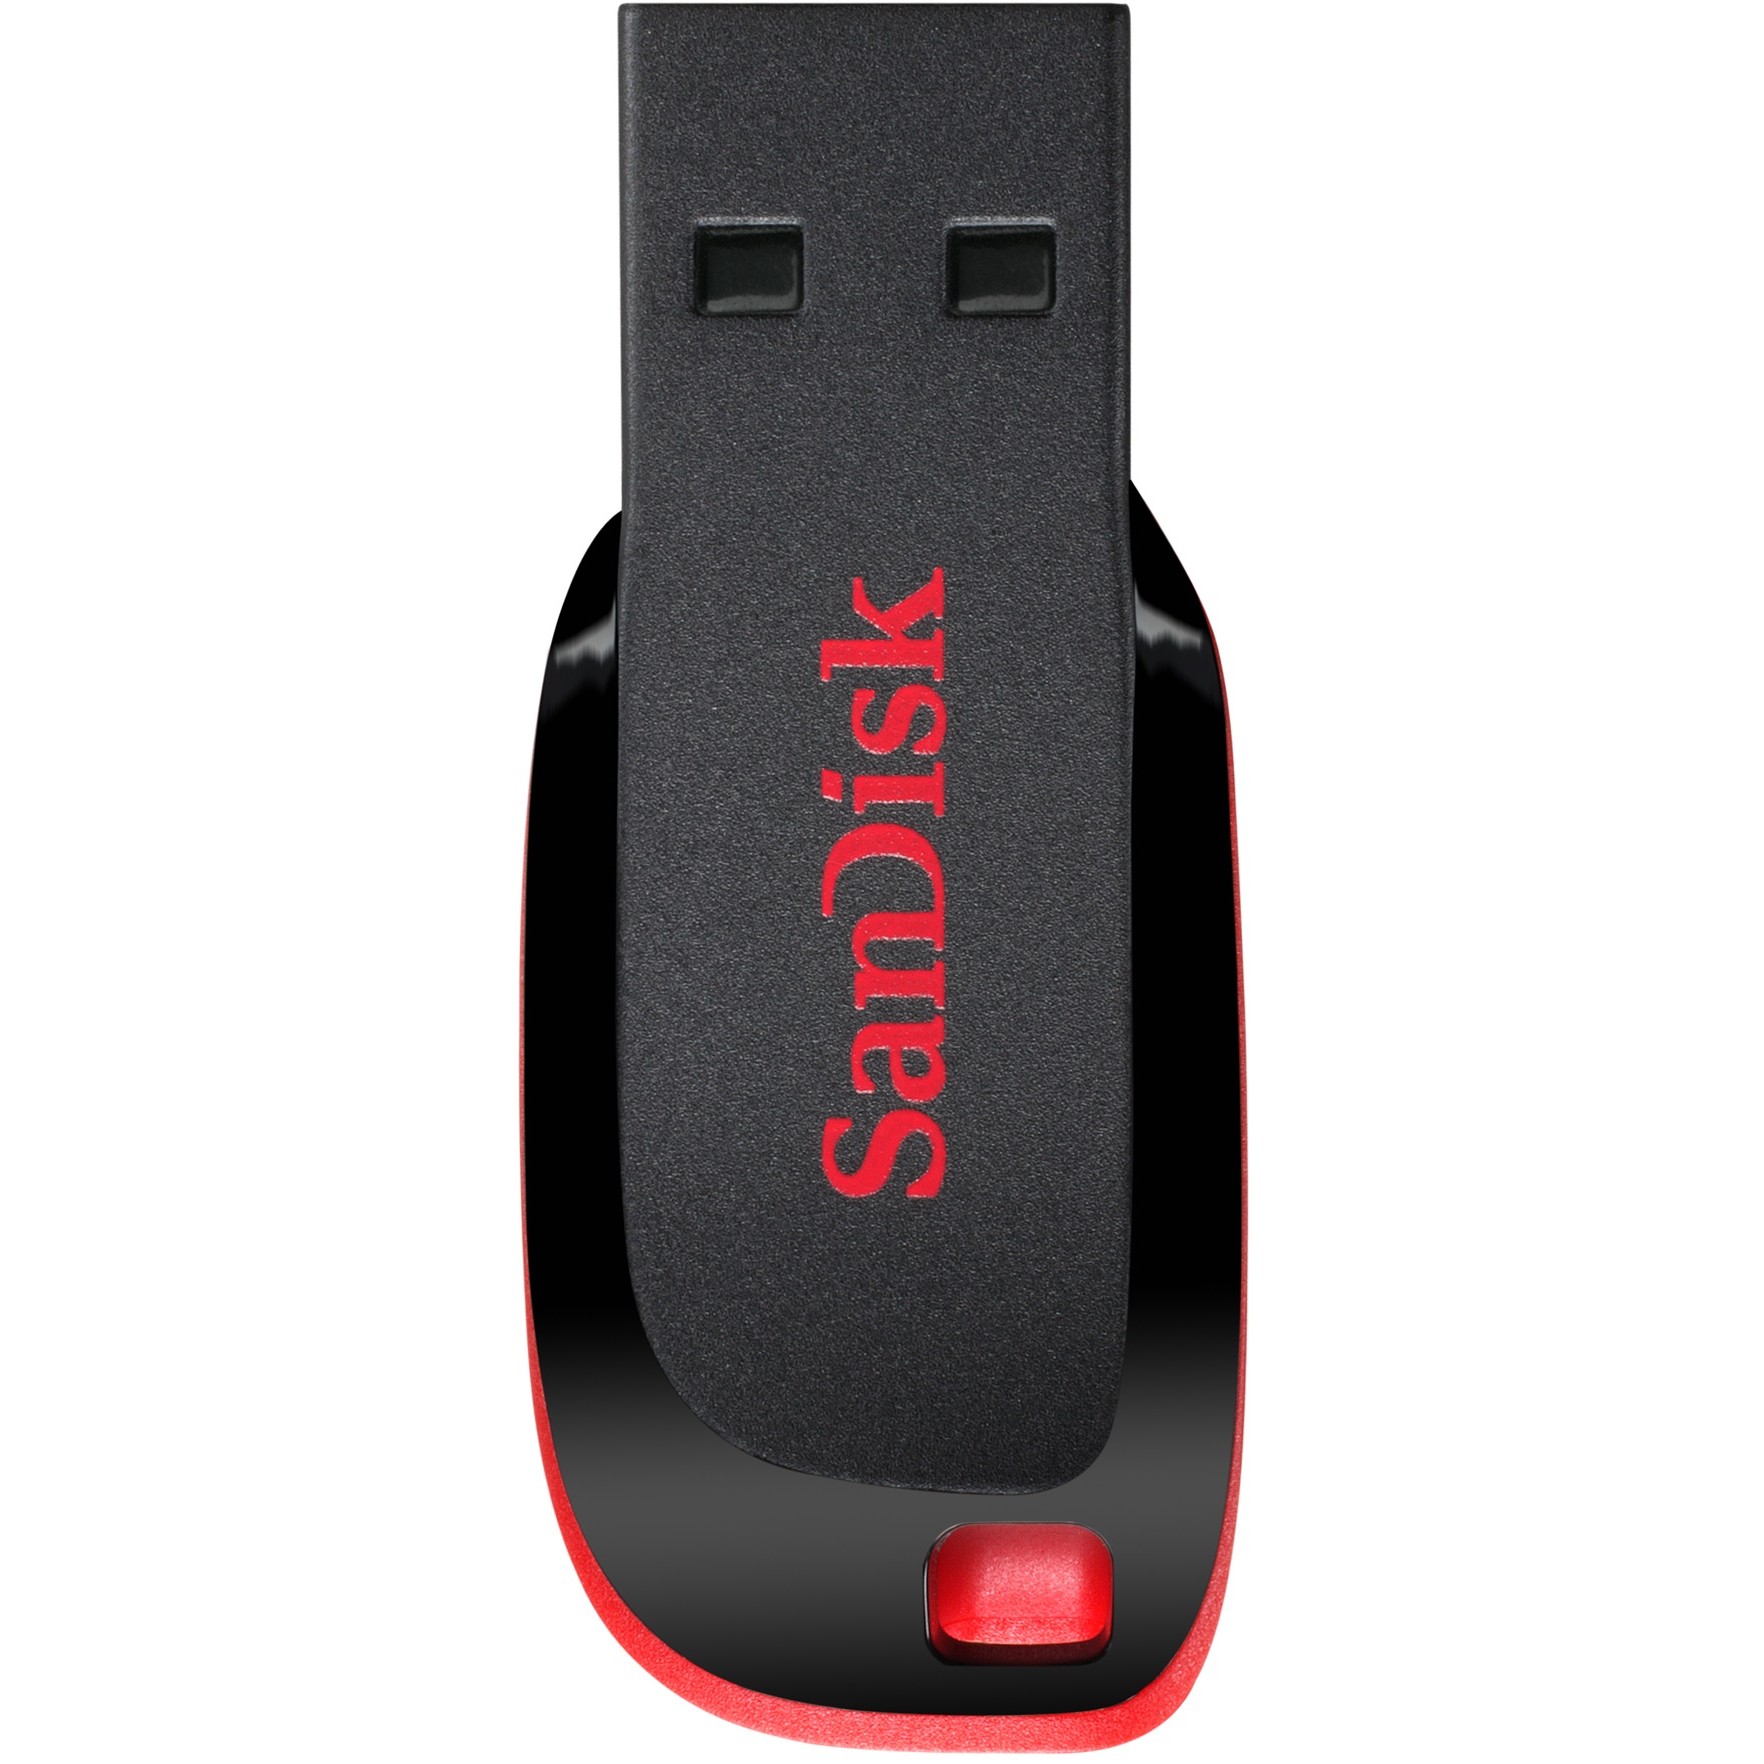 SDCZ50-016G-B35 16GB USB2.0 STICK FLASH DRIVE CRUZER BLADE BLACK/RED SANDISK